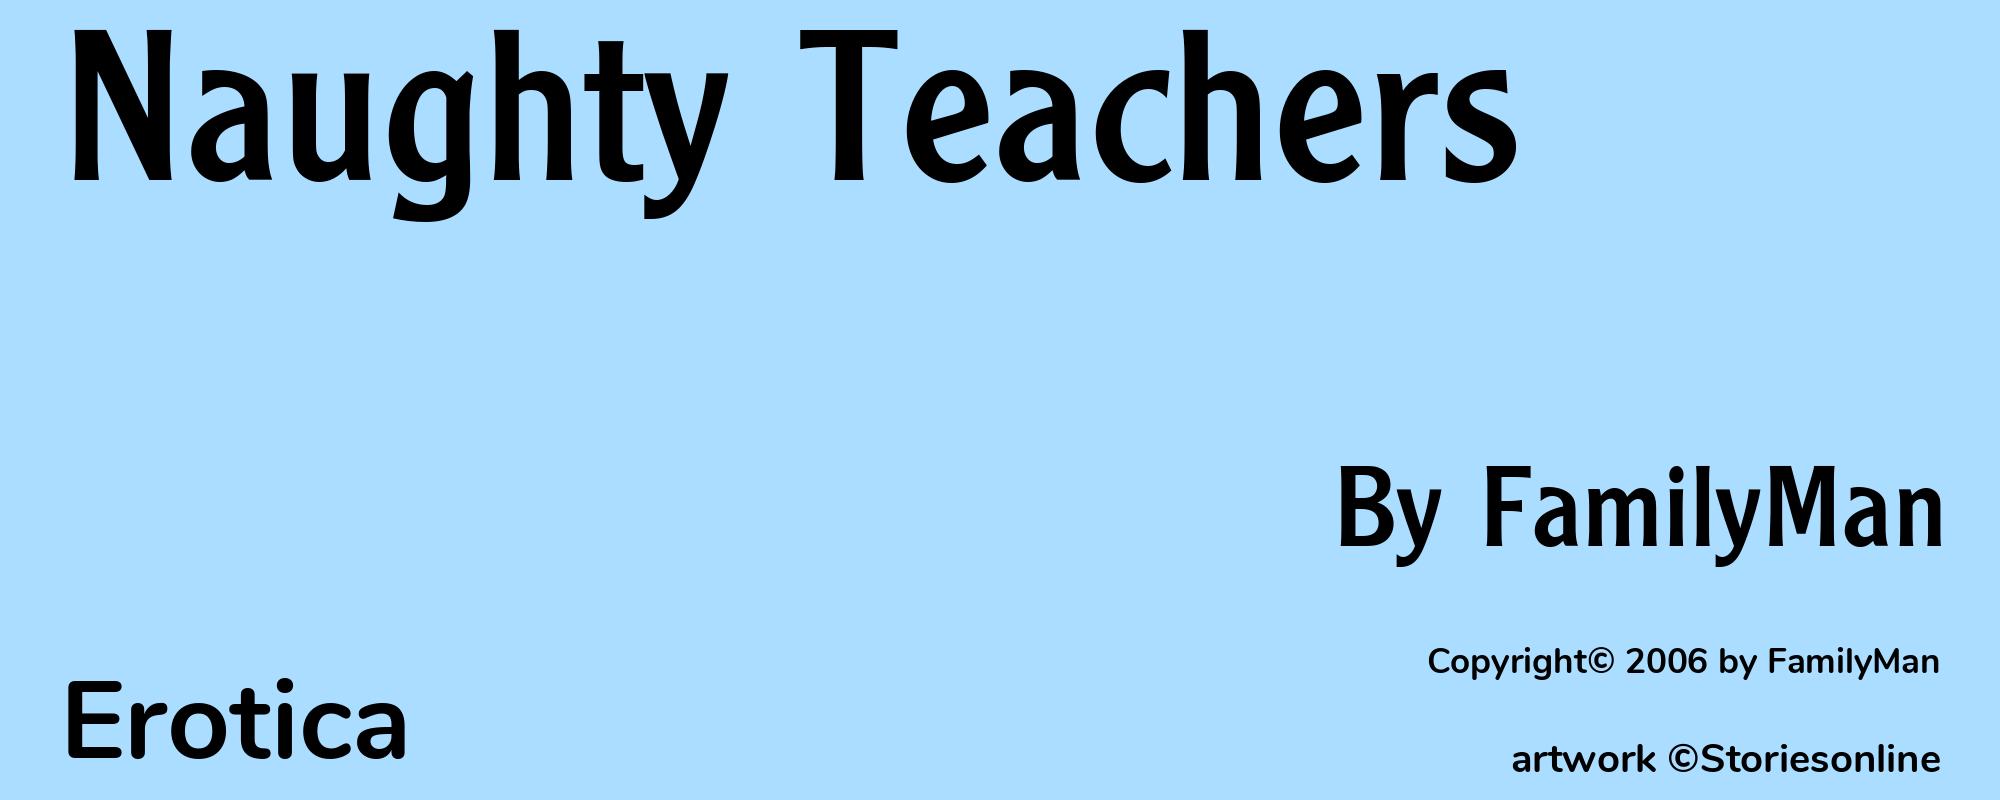 Naughty Teachers - Cover